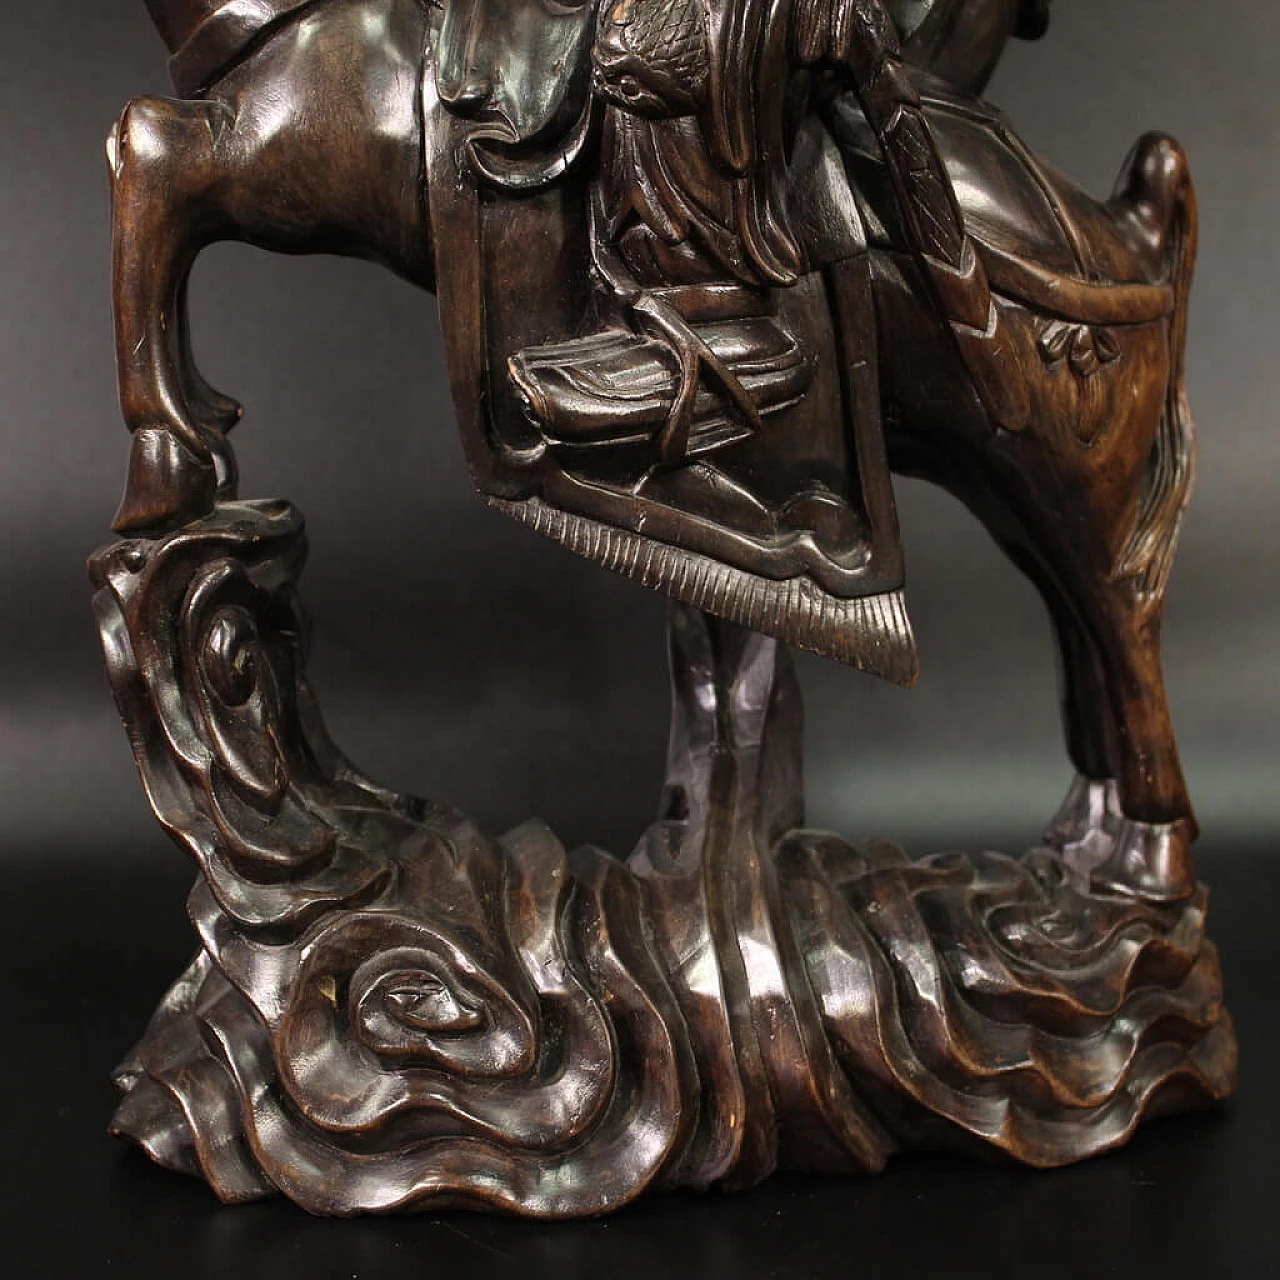 Warrior on horseback and figure, exotic wood sculpture 3